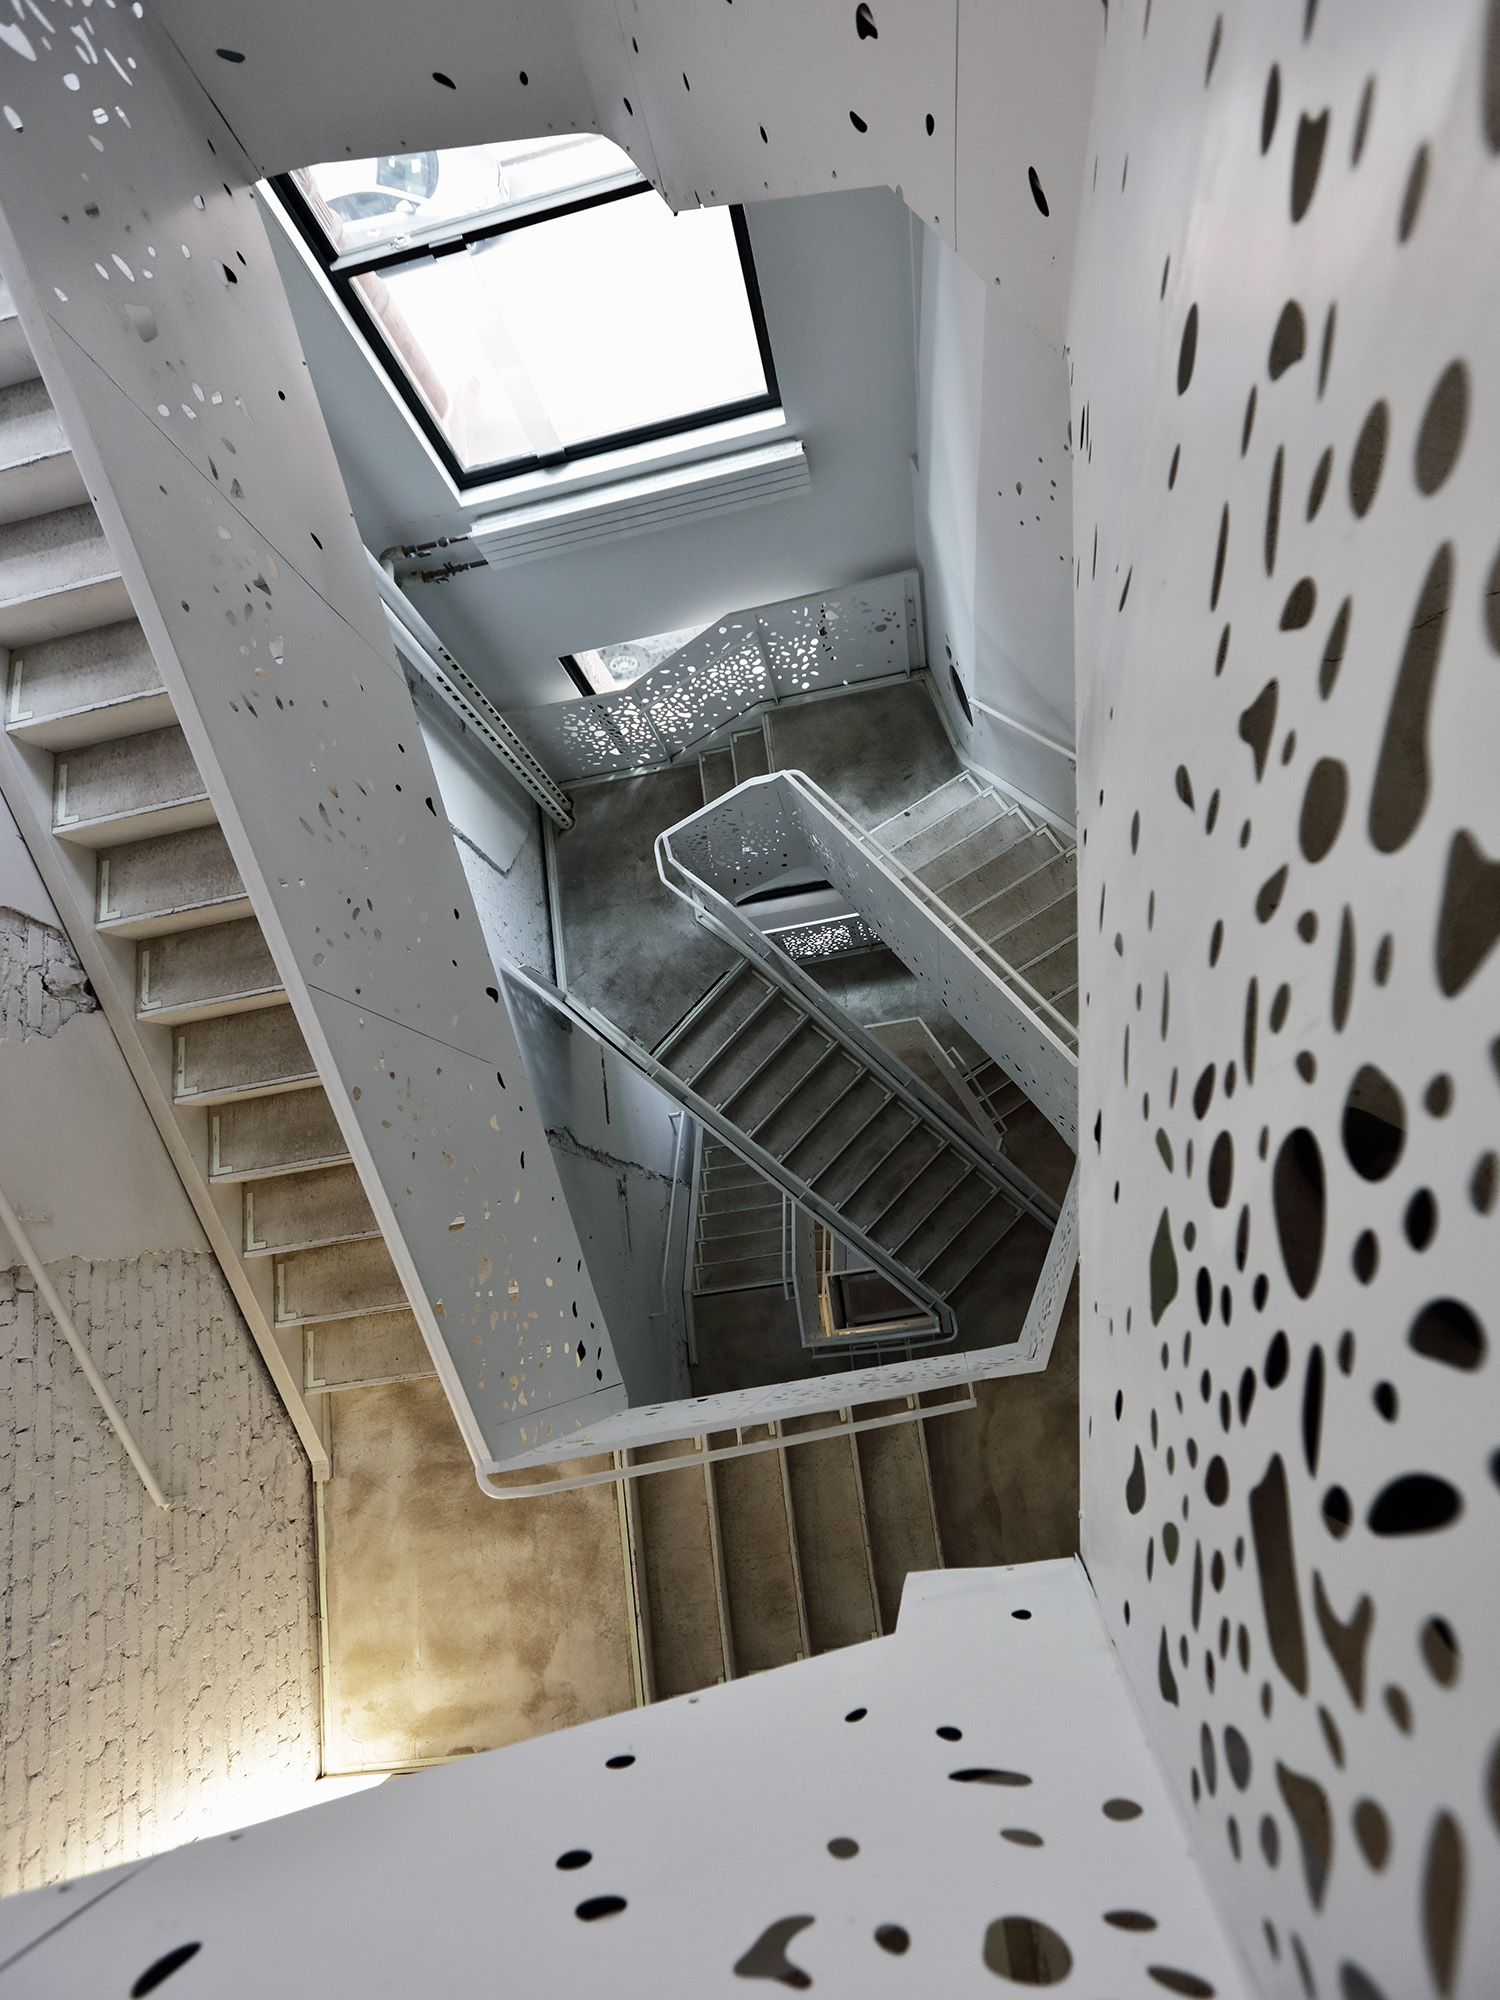 University Philosophy Stairs
Steven Holl Architects, 2007
New York